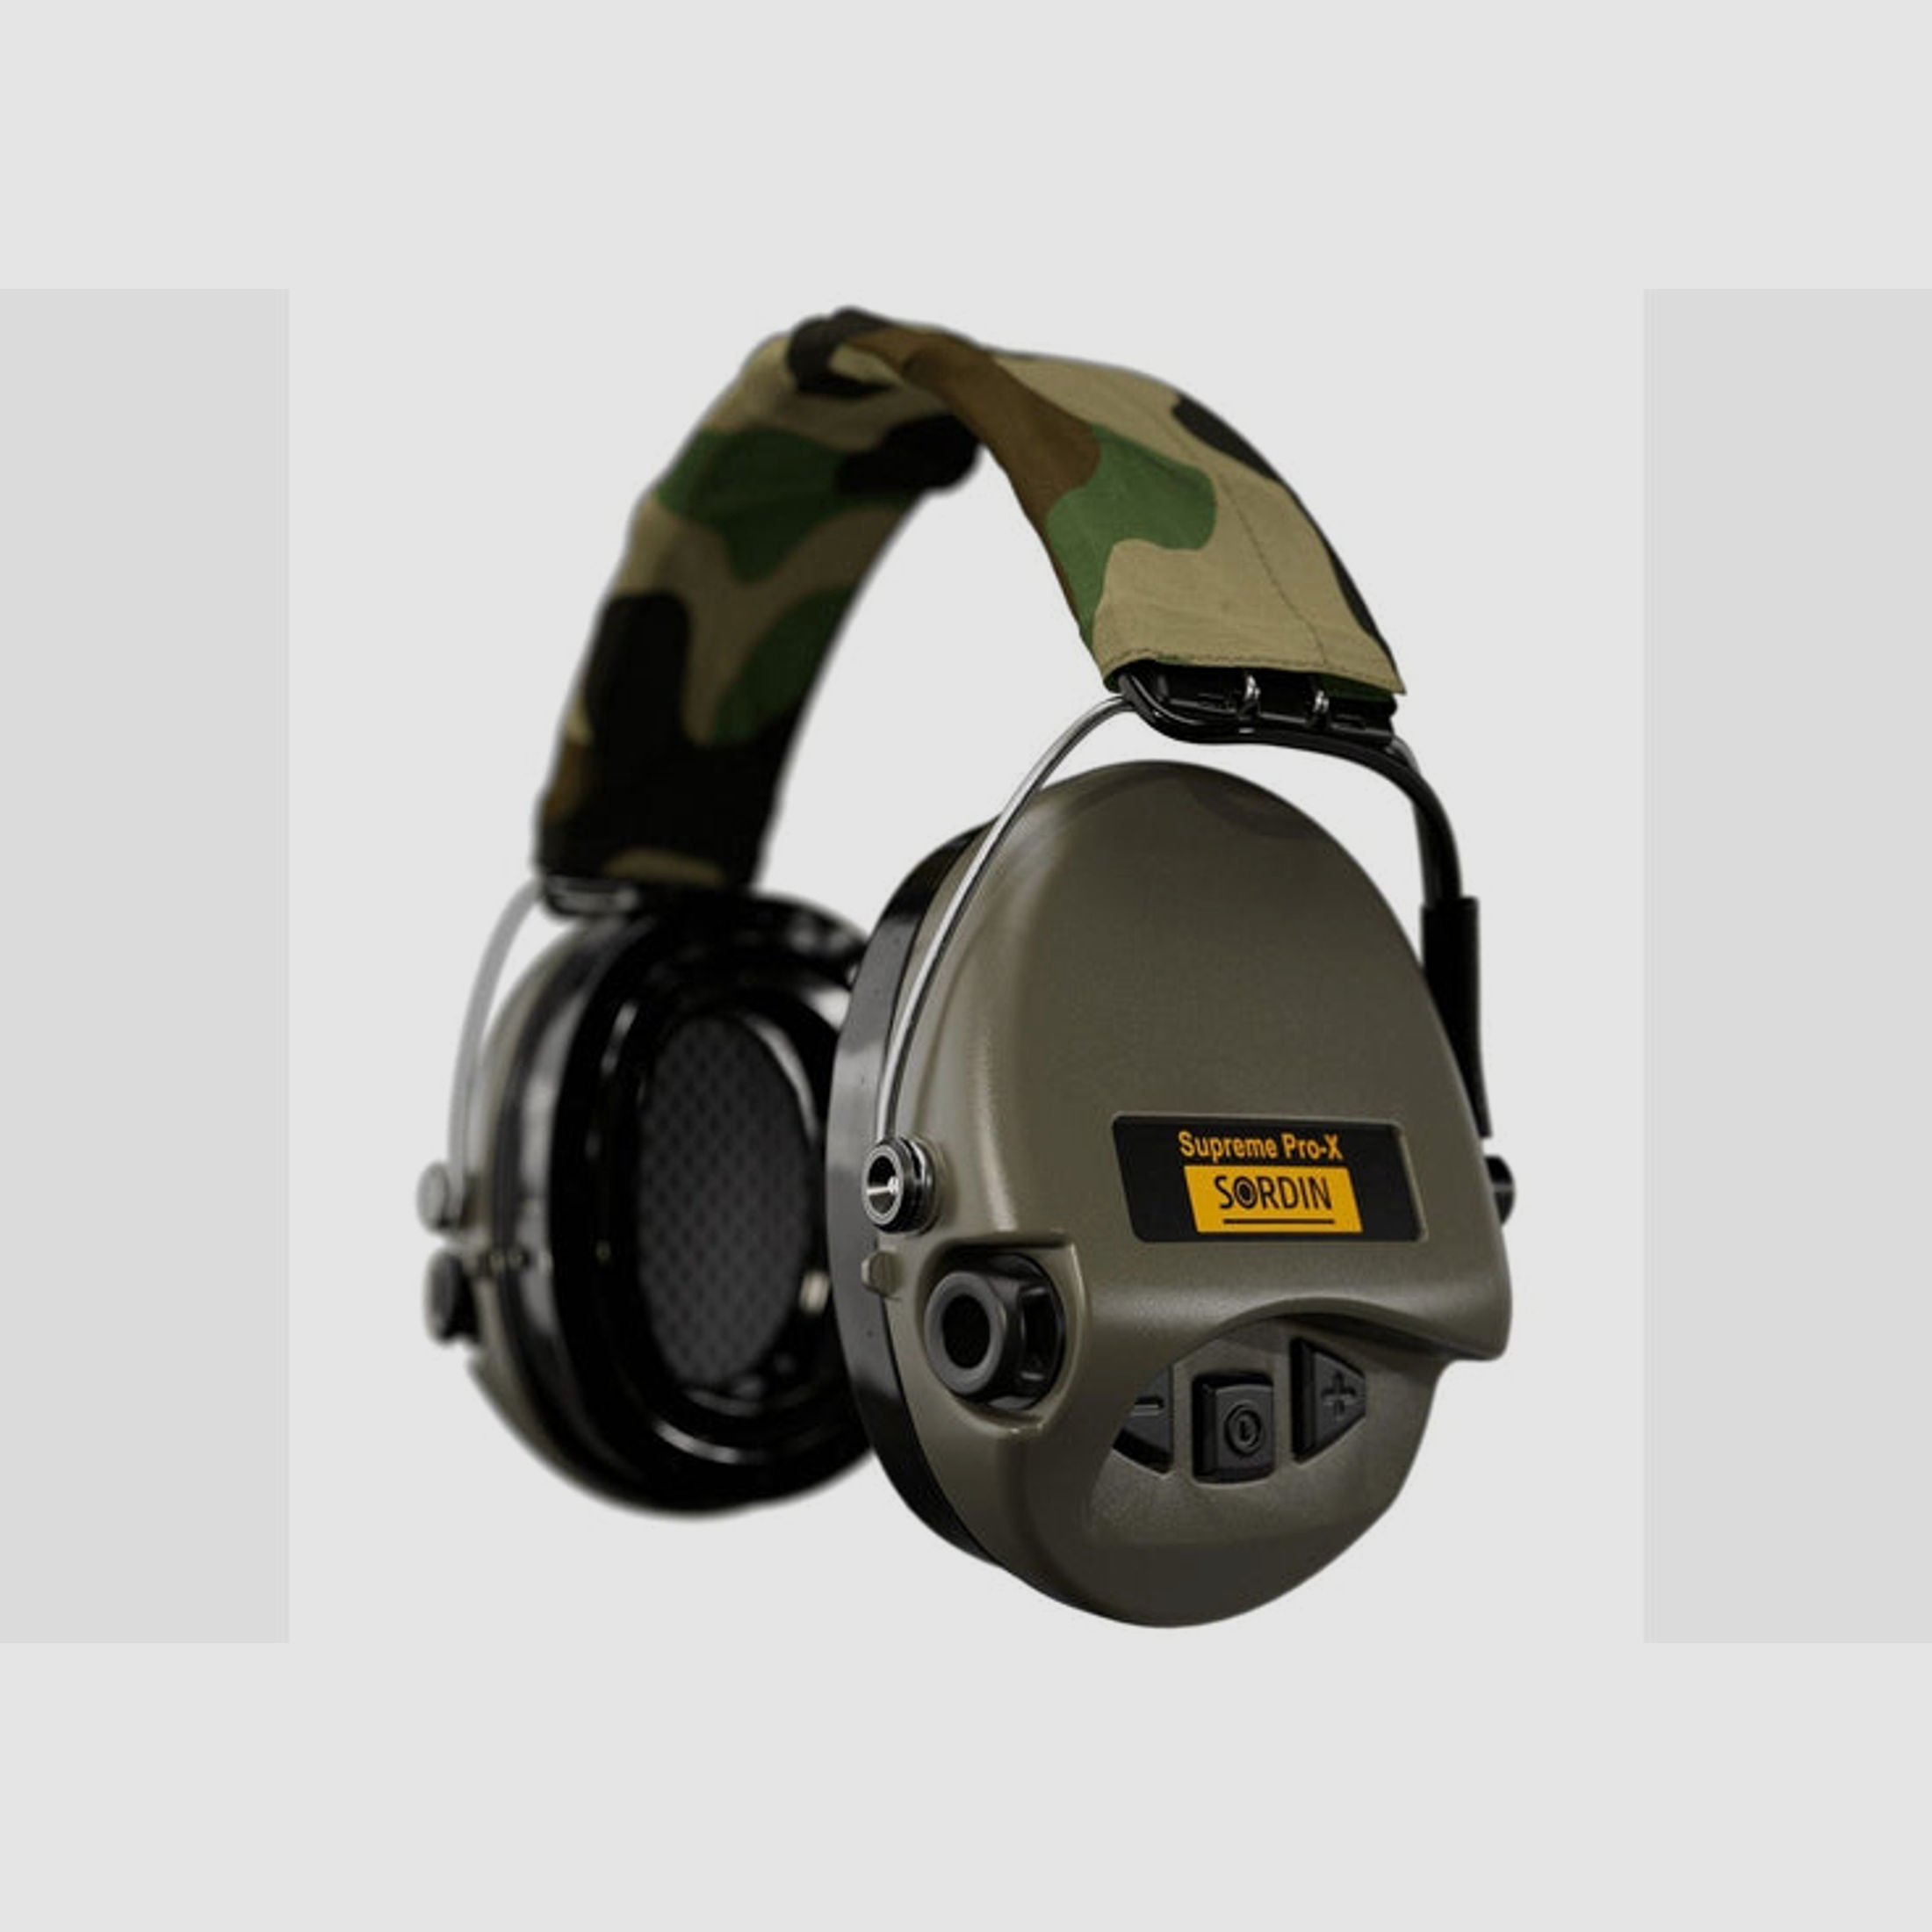 Sordin Supreme Pro-X GEL & LED Gehörschutz - Aktiver Jagd-Gehörschützer